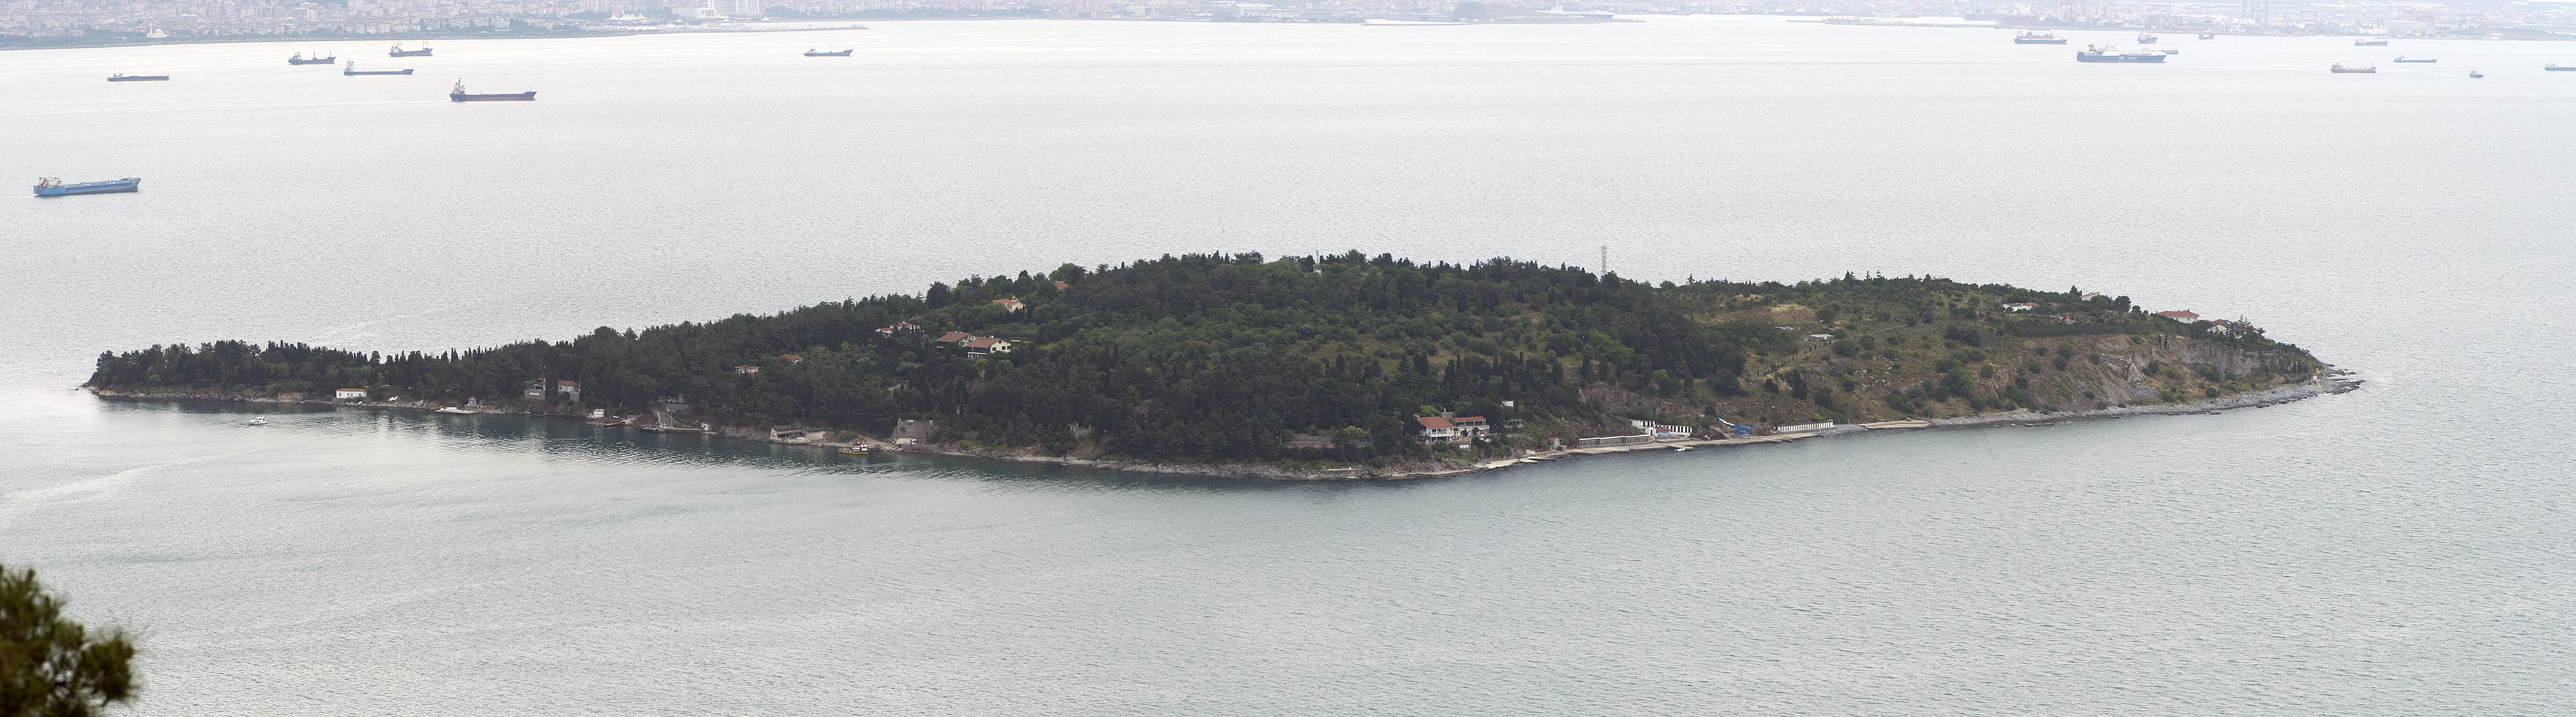 Istanbul Big Princes Island May 2014 panorama 6579.jpg